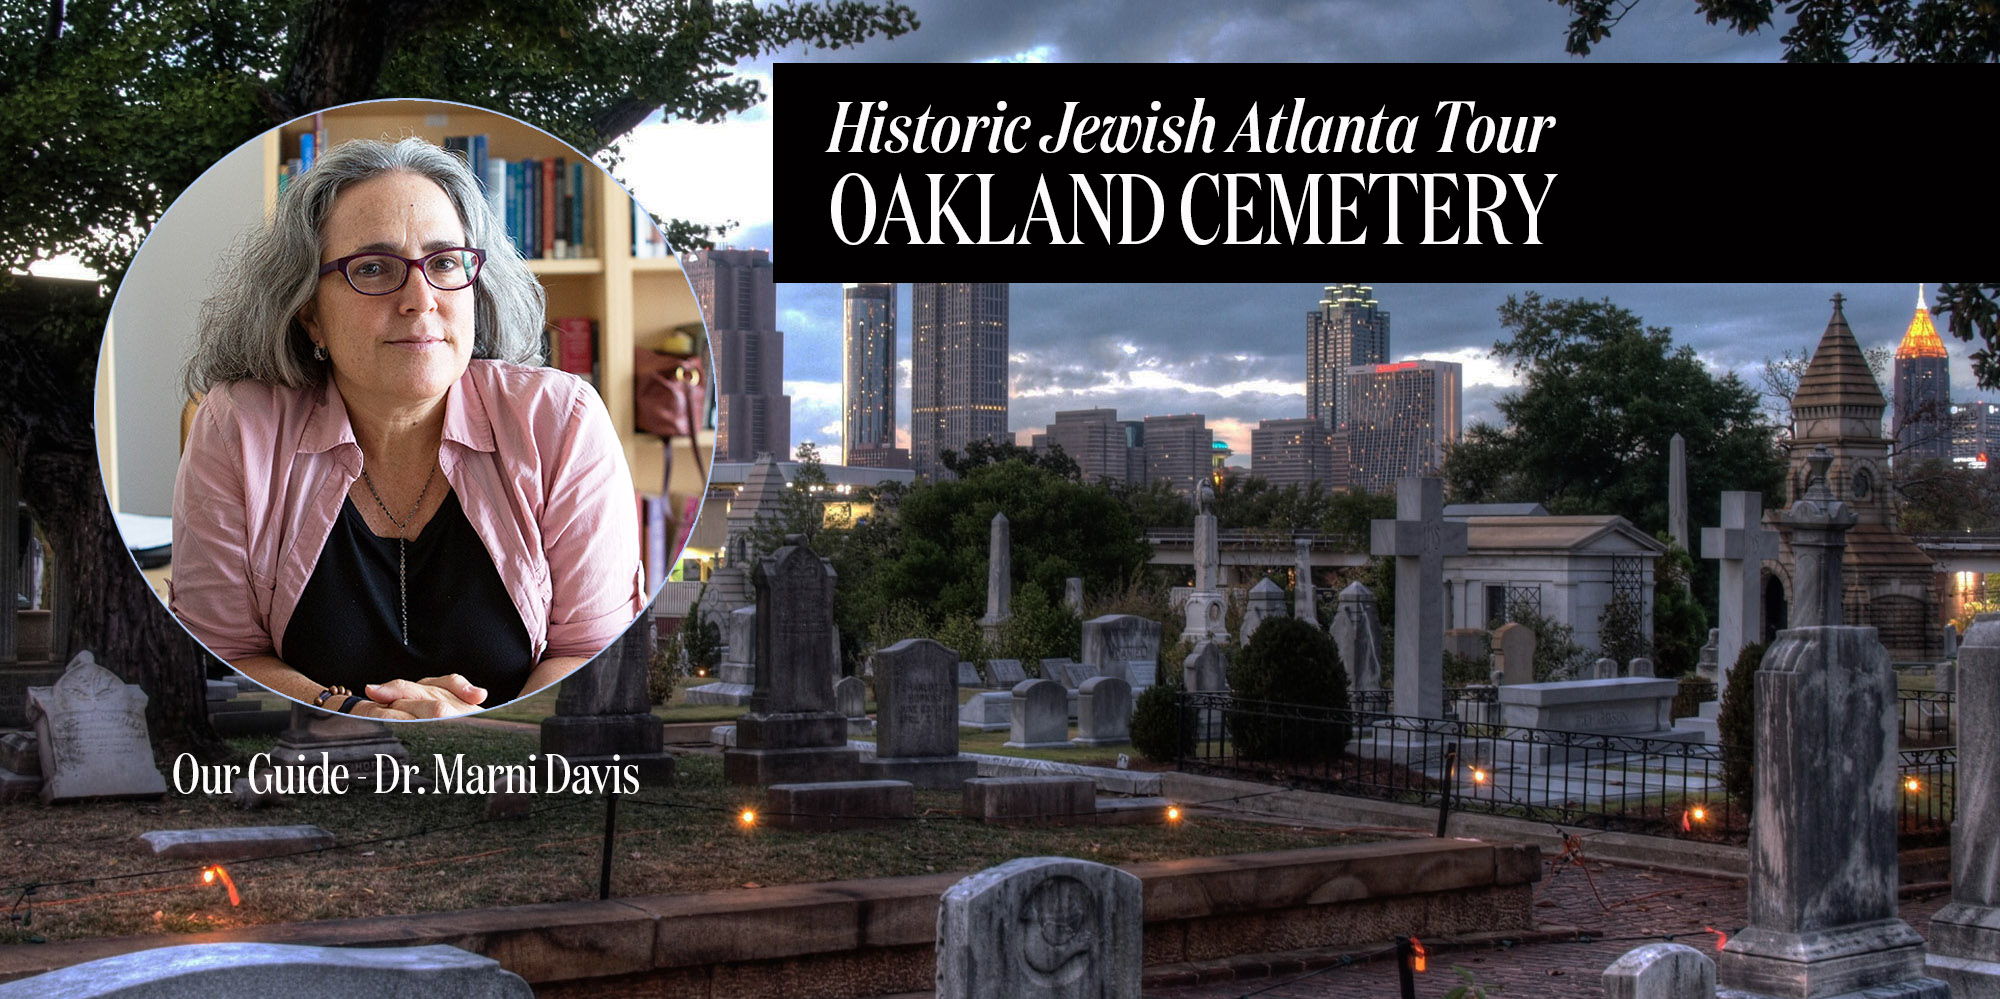 Historic Jewish Atlanta Tours - Oakland Cemetery promotional image